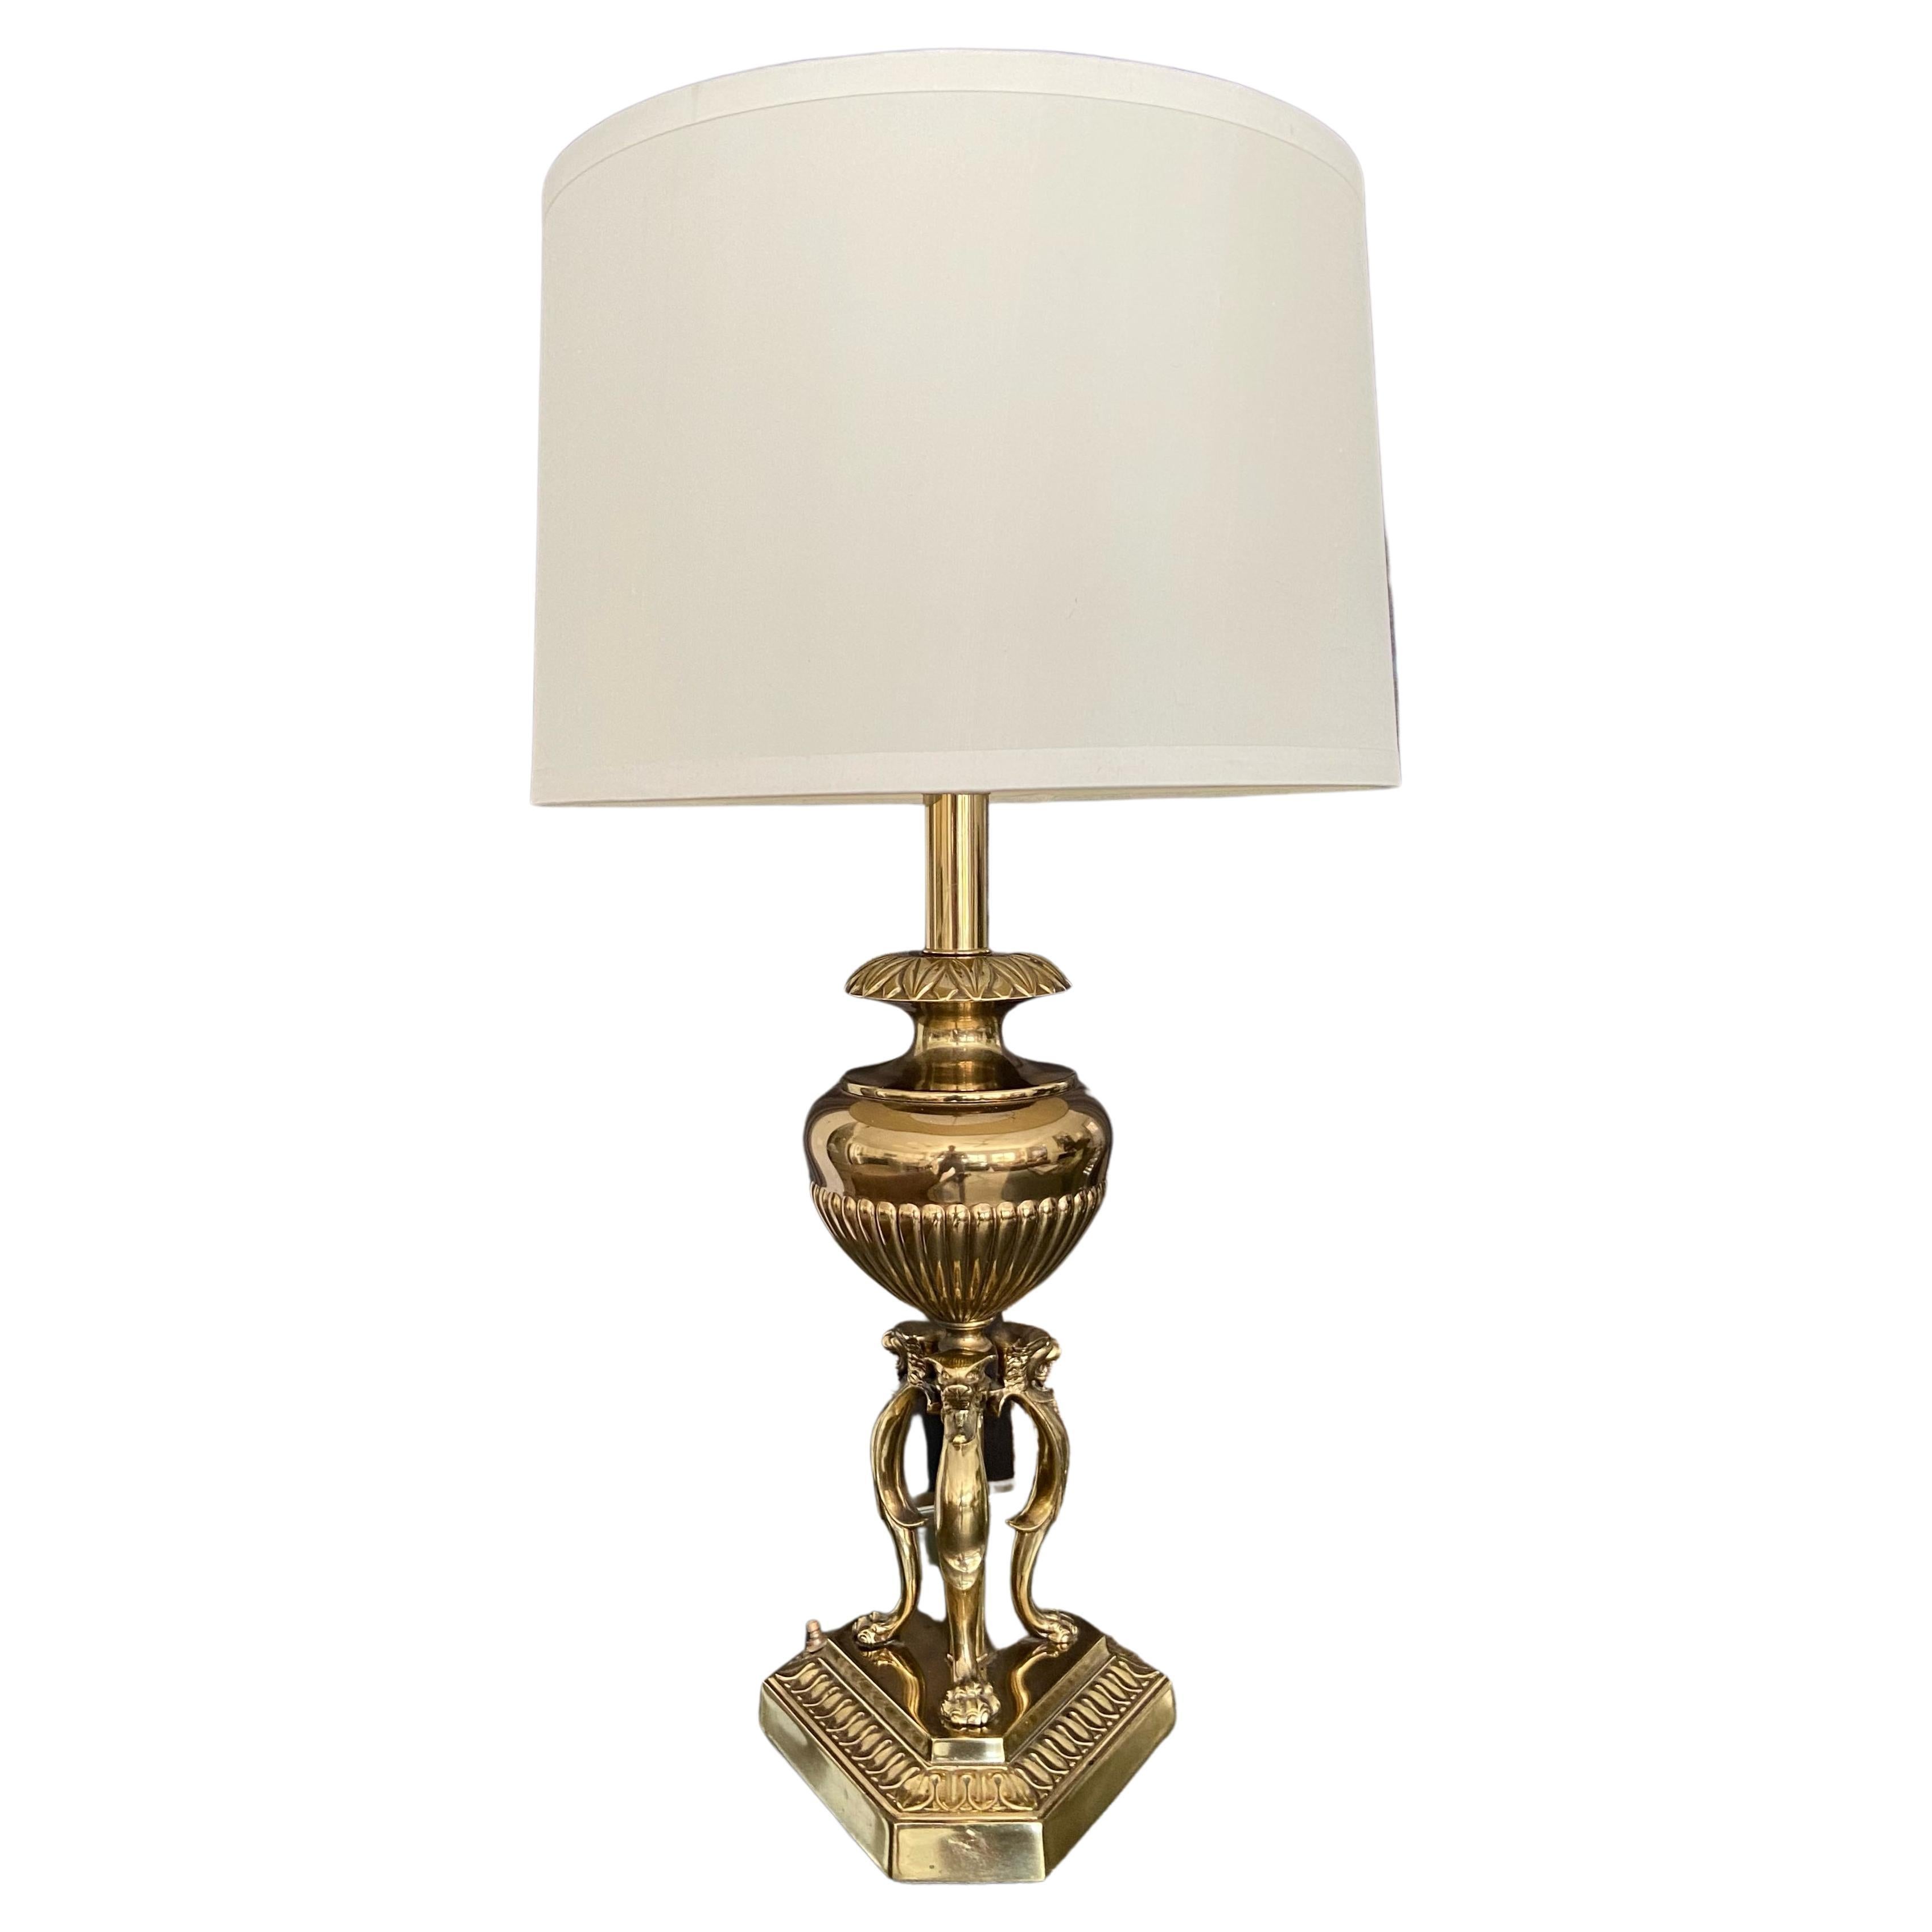 Single Rembrandt Brass Lion Motif Table Lamp For Sale